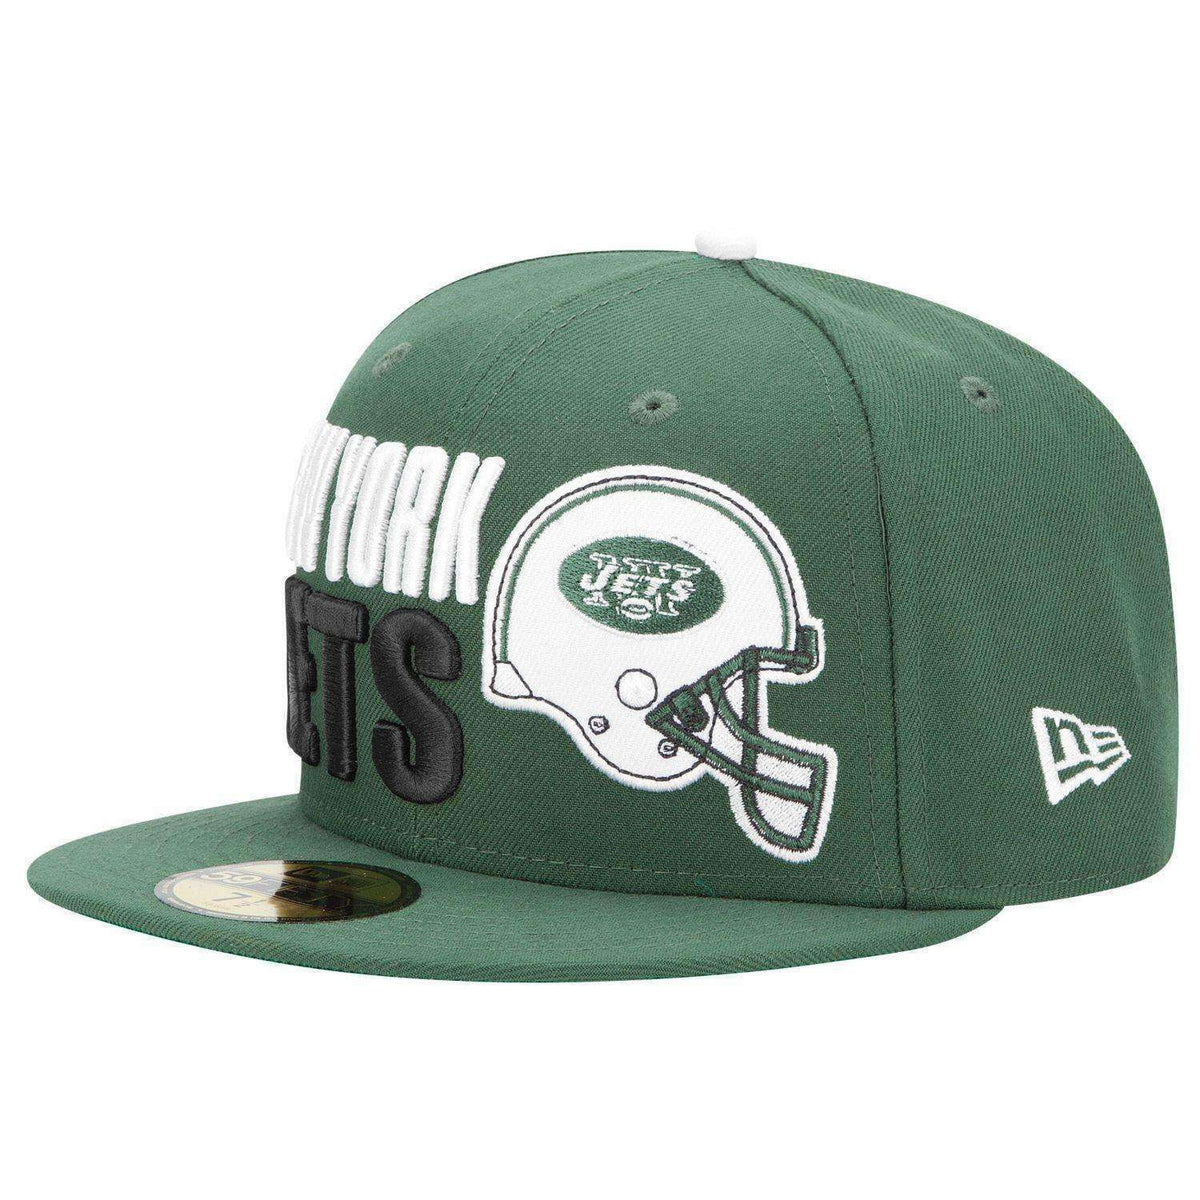 New York Jets Football Helmet New Era 59Fifty hat new with stickers NY –  Marvelous Marvin Murphy's